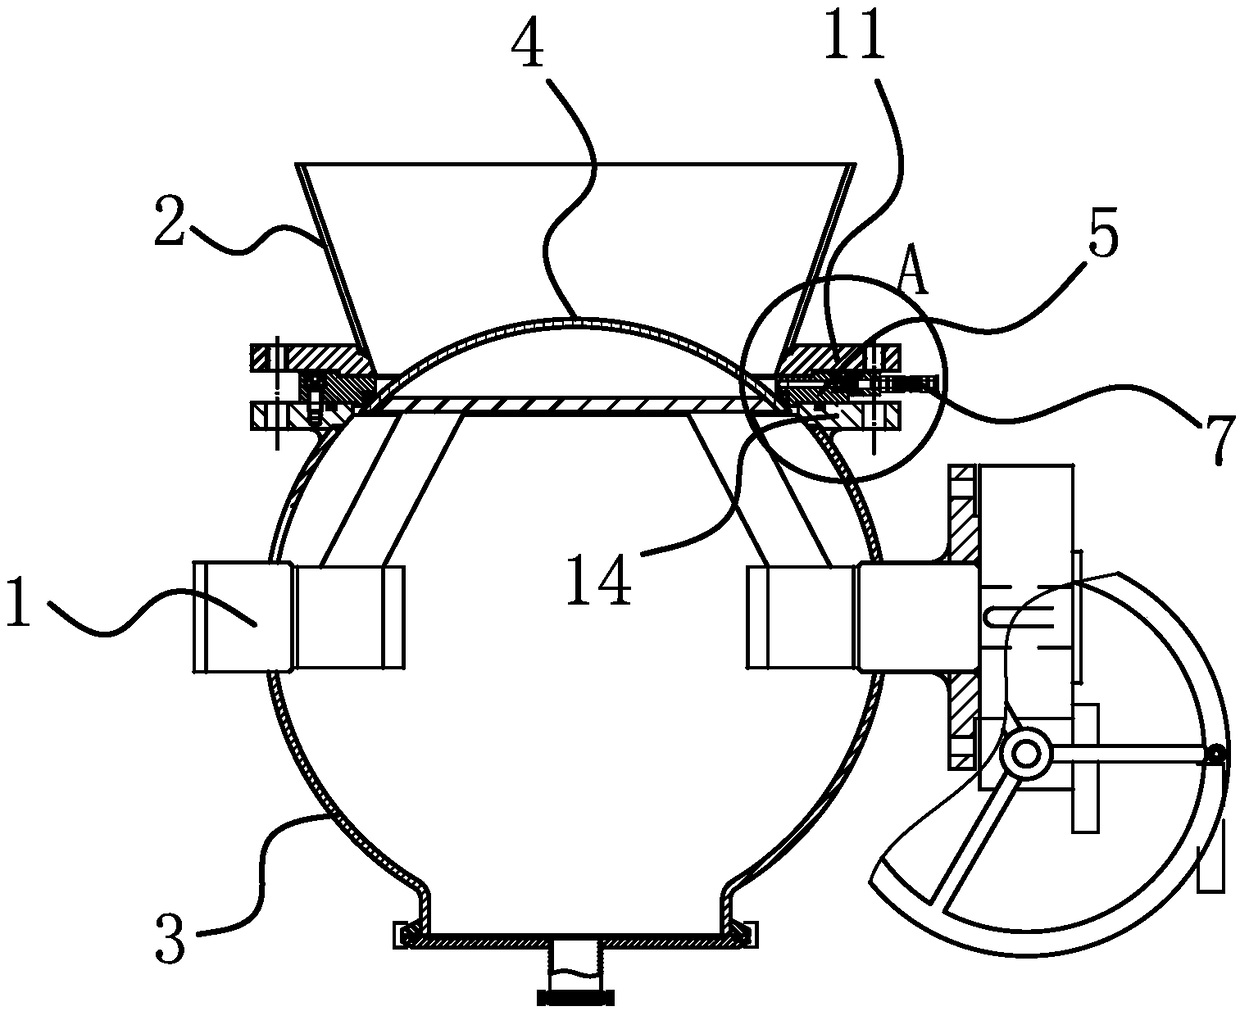 a hemispherical valve